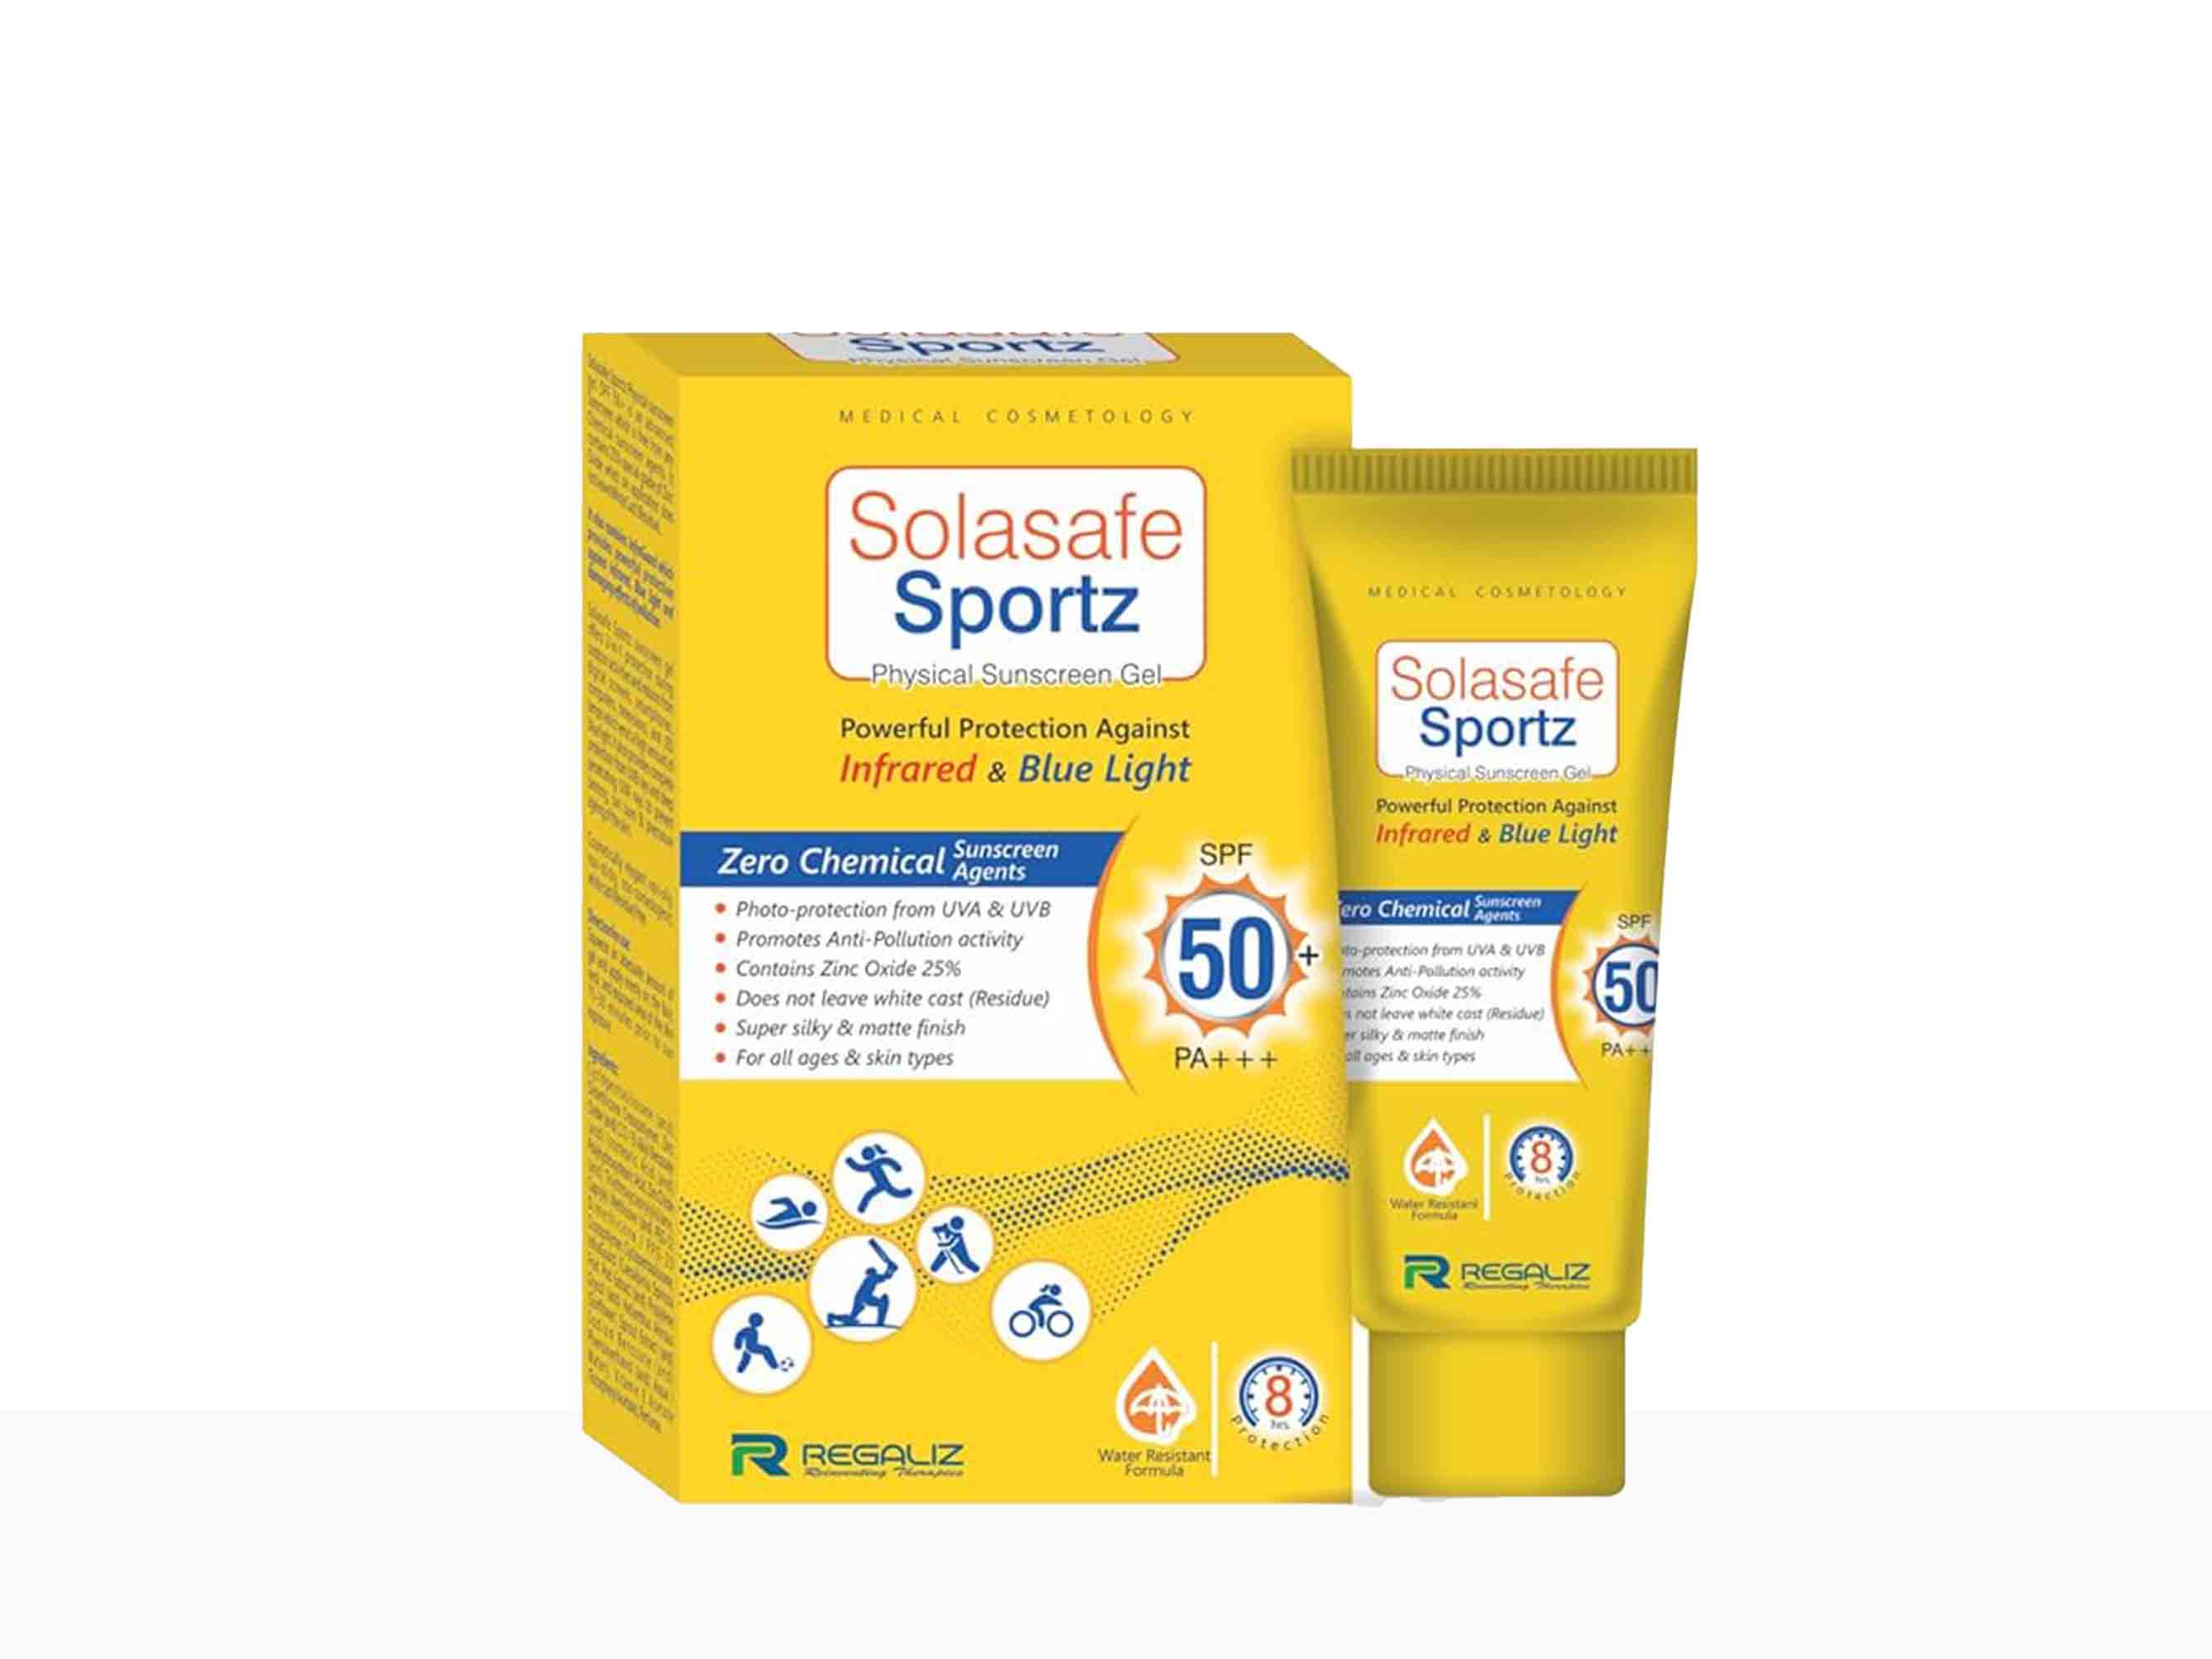 Solasafe Sportz Physical Sunscreen Gel SPF 50+ PA+++